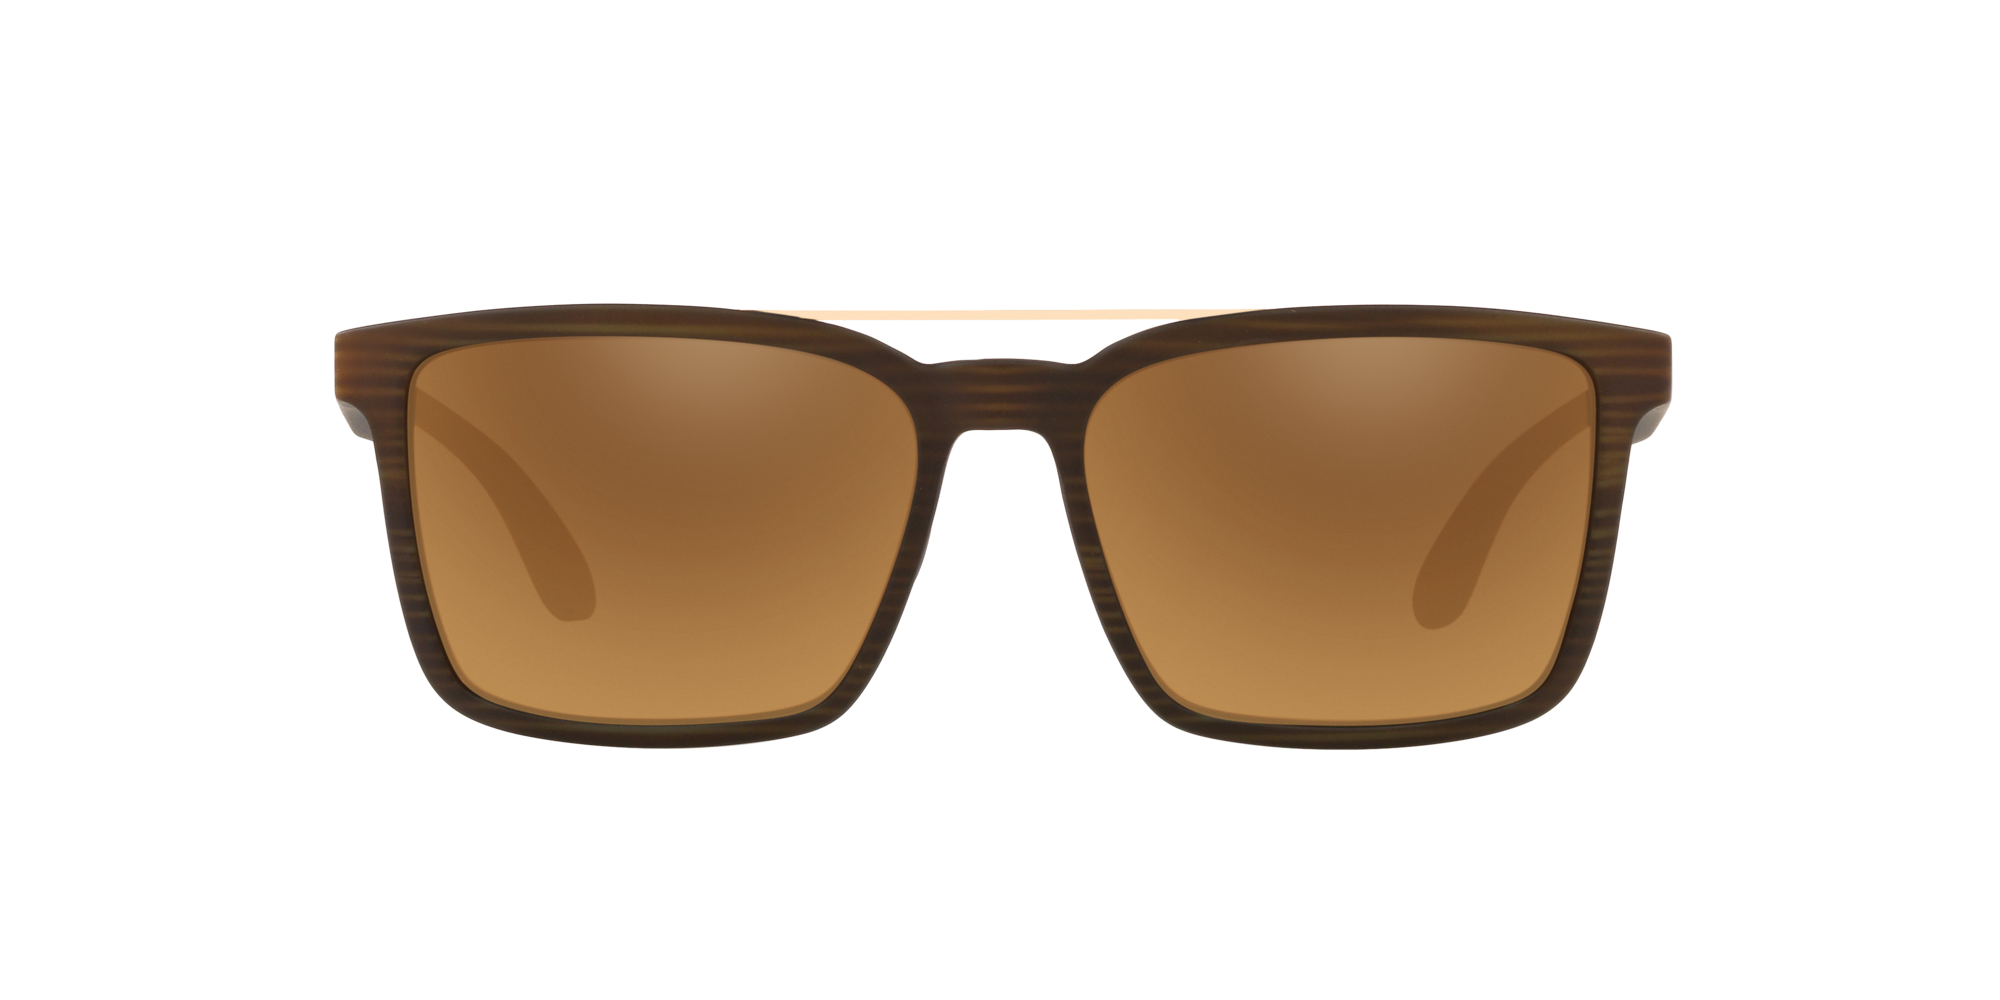 Buy Men's Polarized Full Rim Sunglasses with Nose Pads Online | Centrepoint  Bahrain